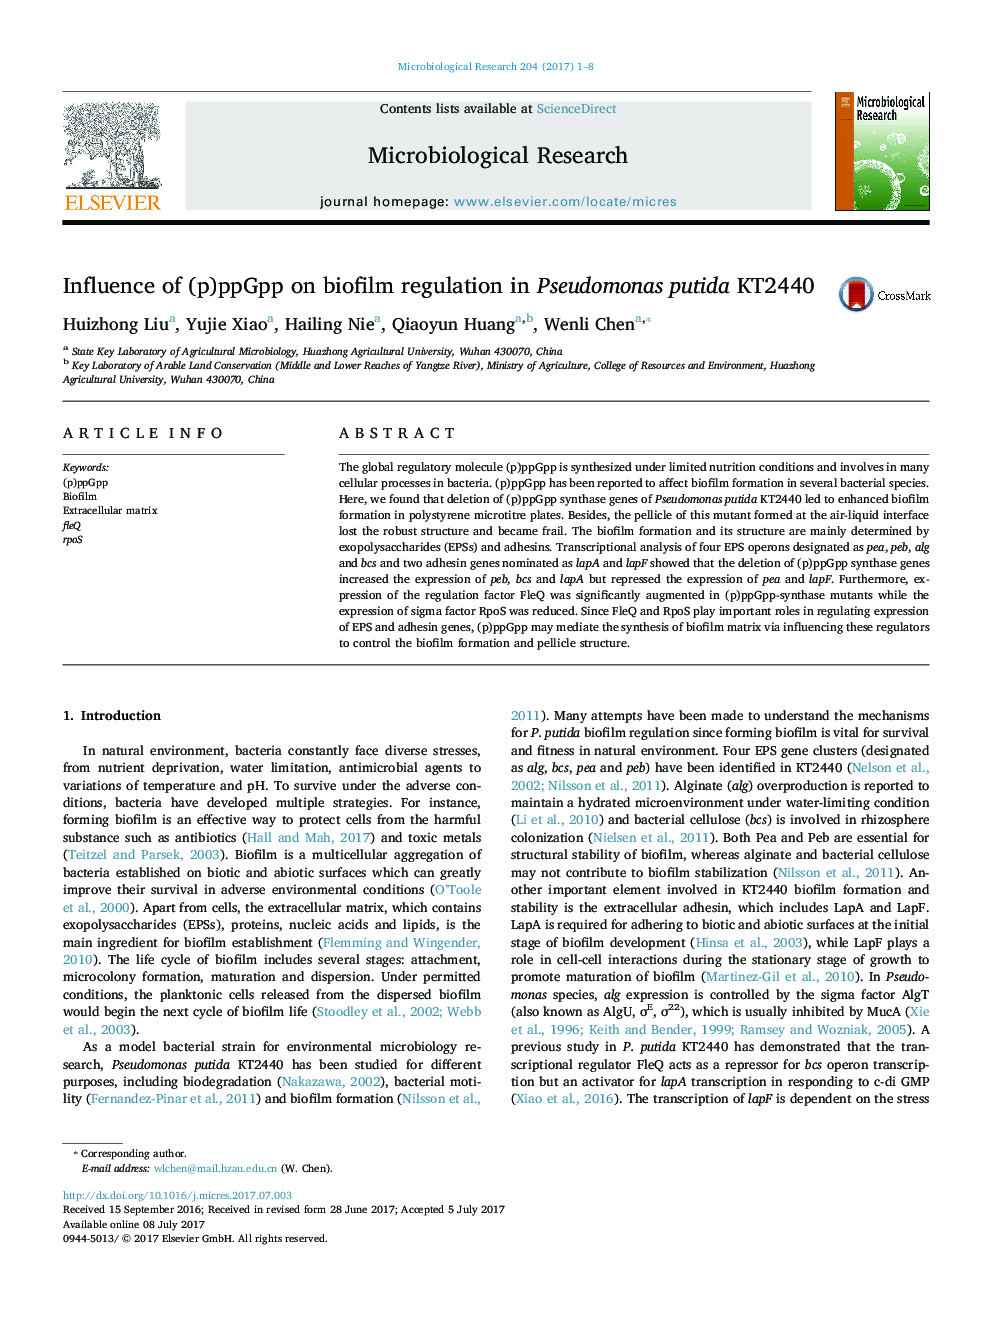 Influence of (p)ppGpp on biofilm regulation in Pseudomonas putida KT2440